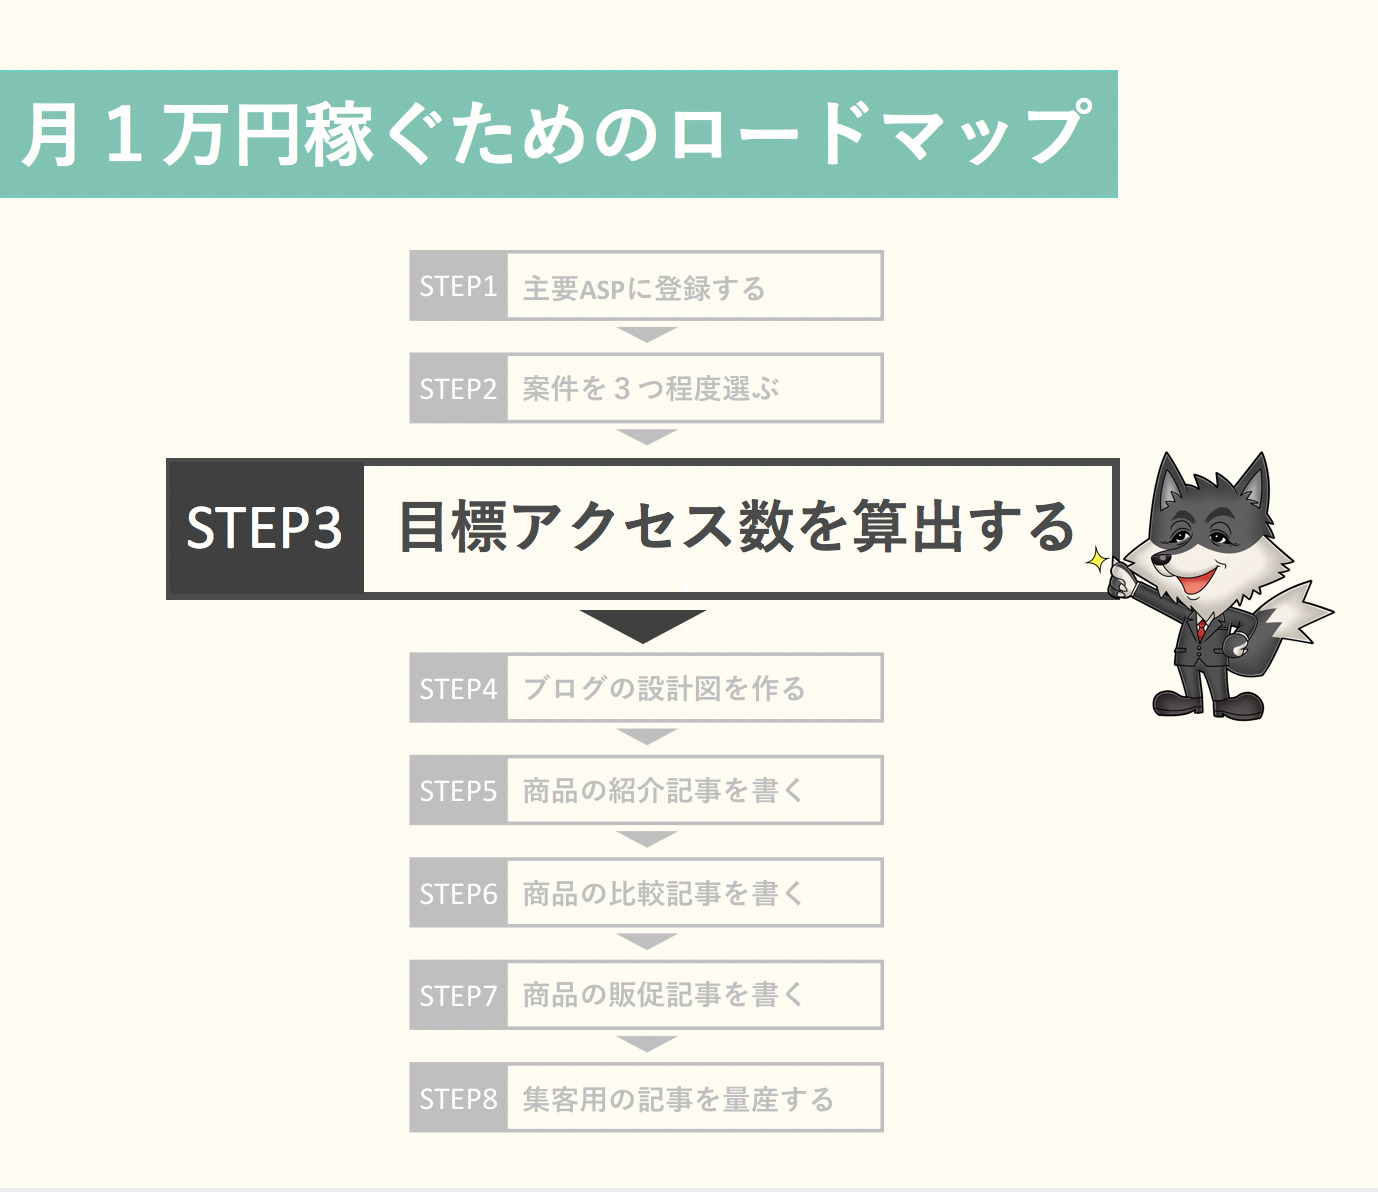 STEP3：ブログで月１万円稼ぐための目標を立てて必要アクセス数を導き出す